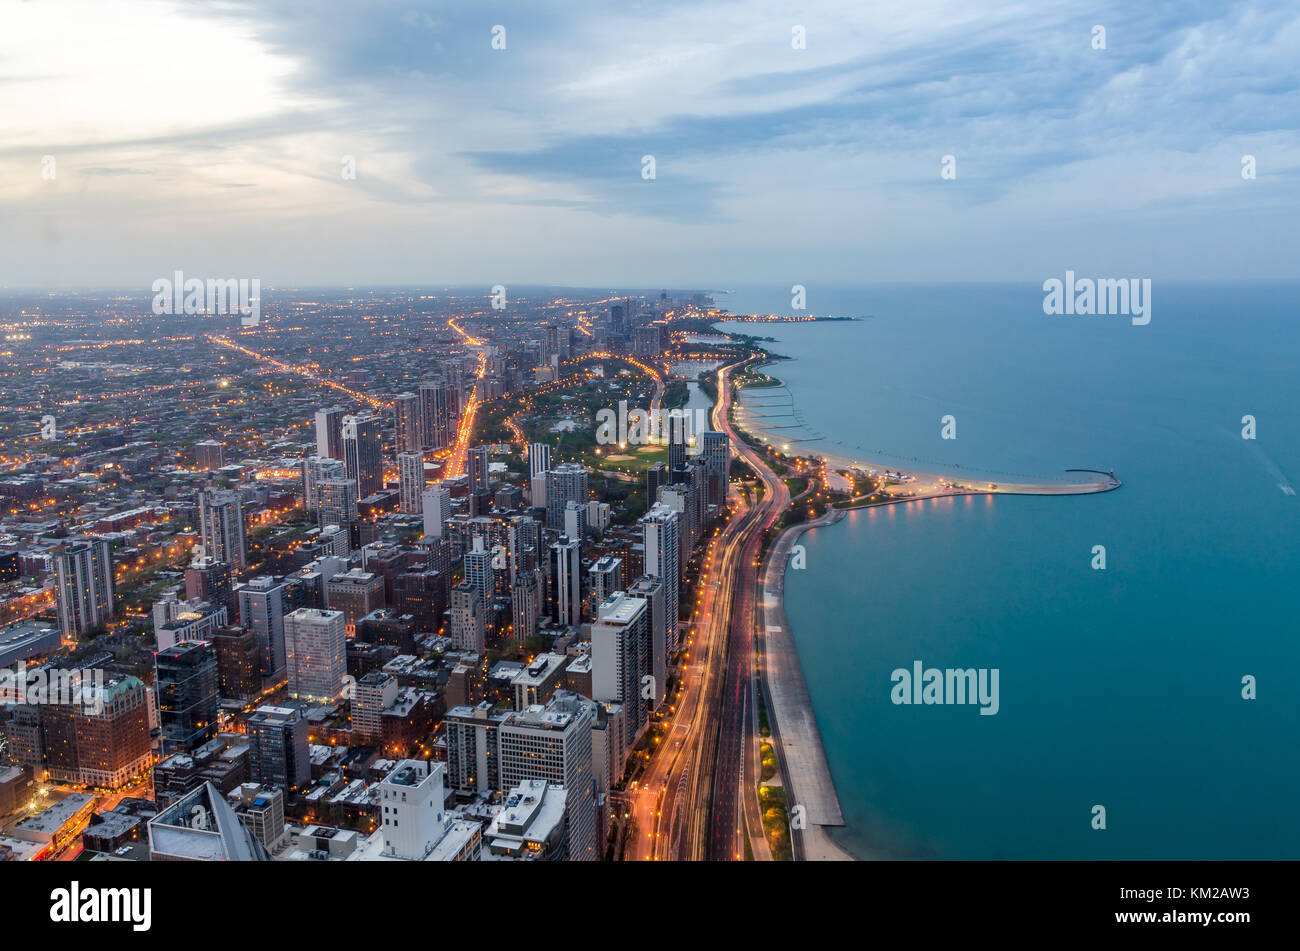 chicago skyline at night Stock Photo